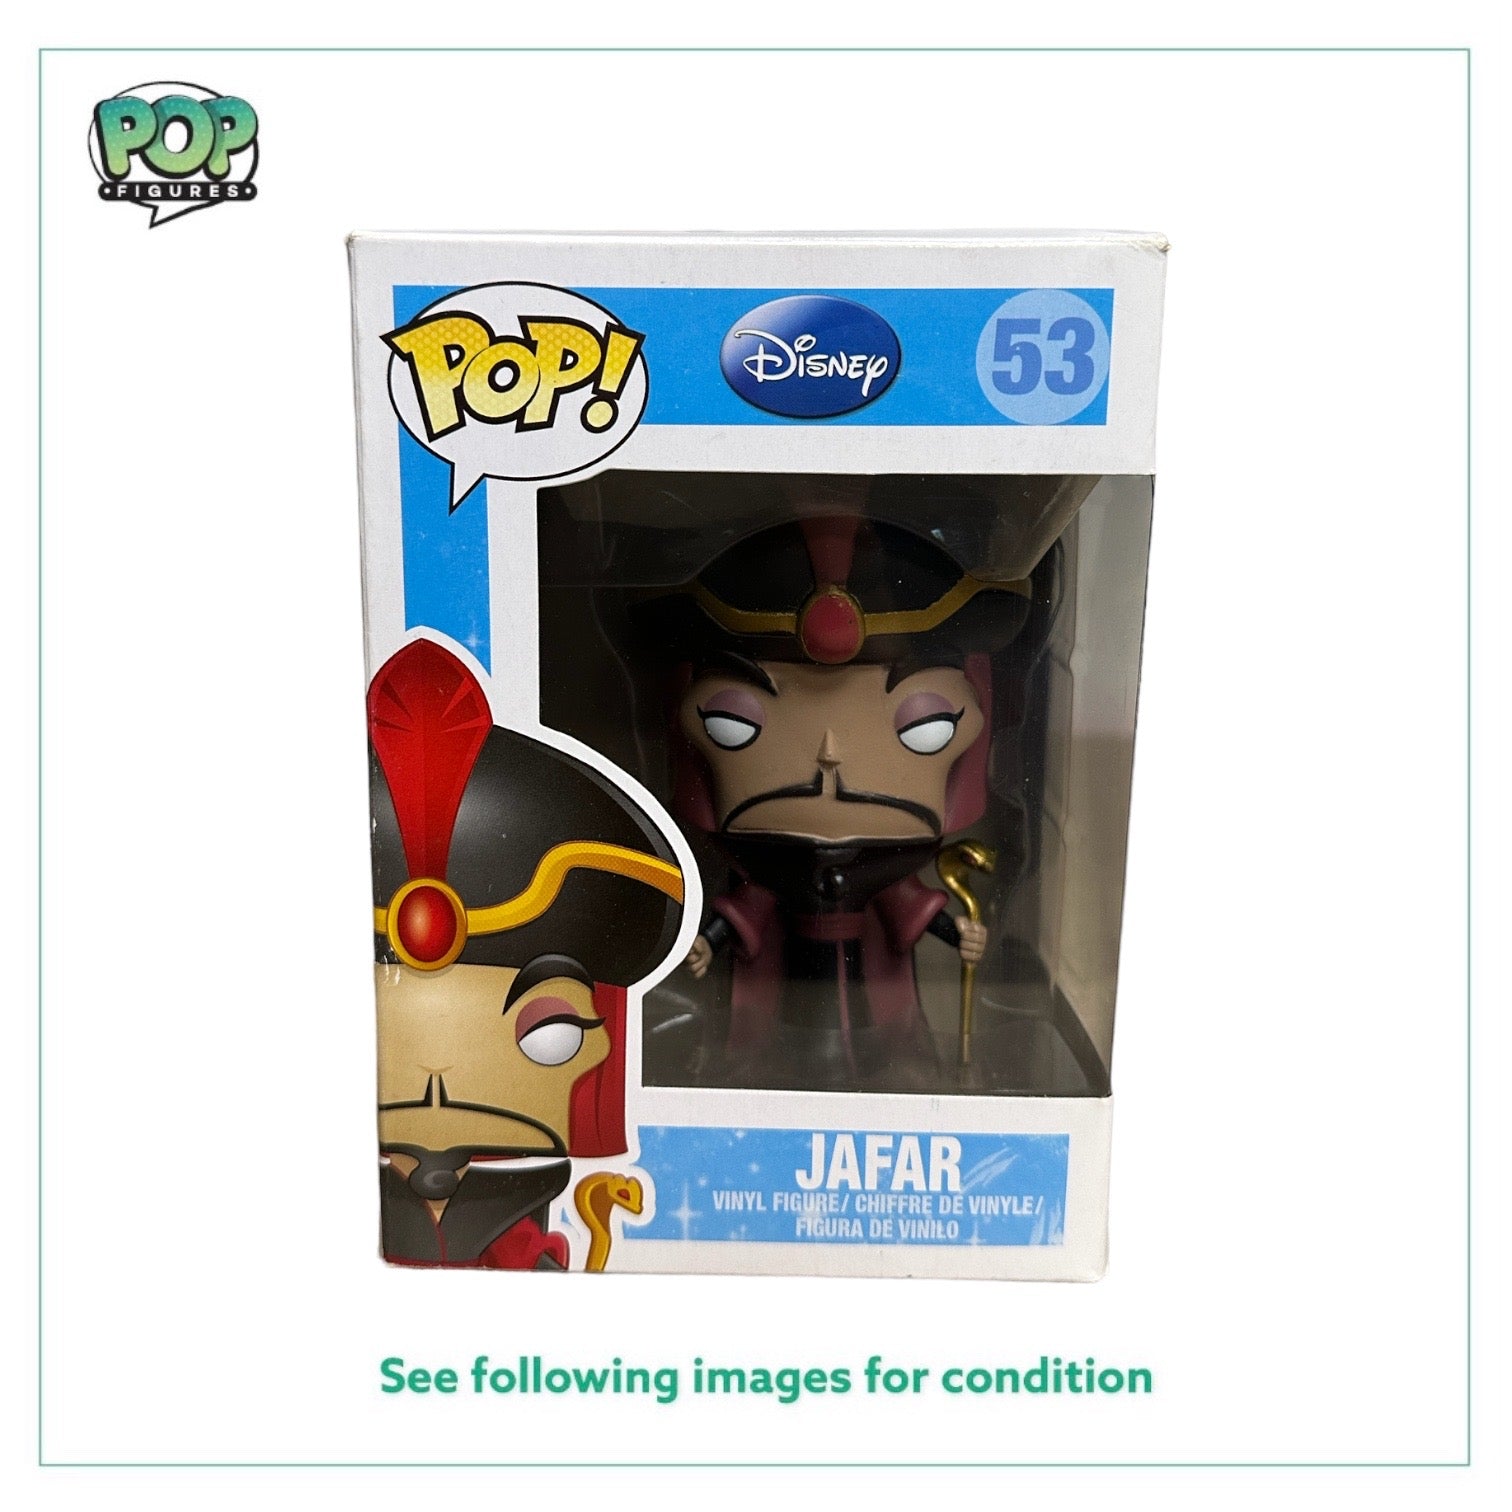 Jafar #53 Funko Pop! - Disney Series 5 - 2013 Pop! - Condition 6.5/10